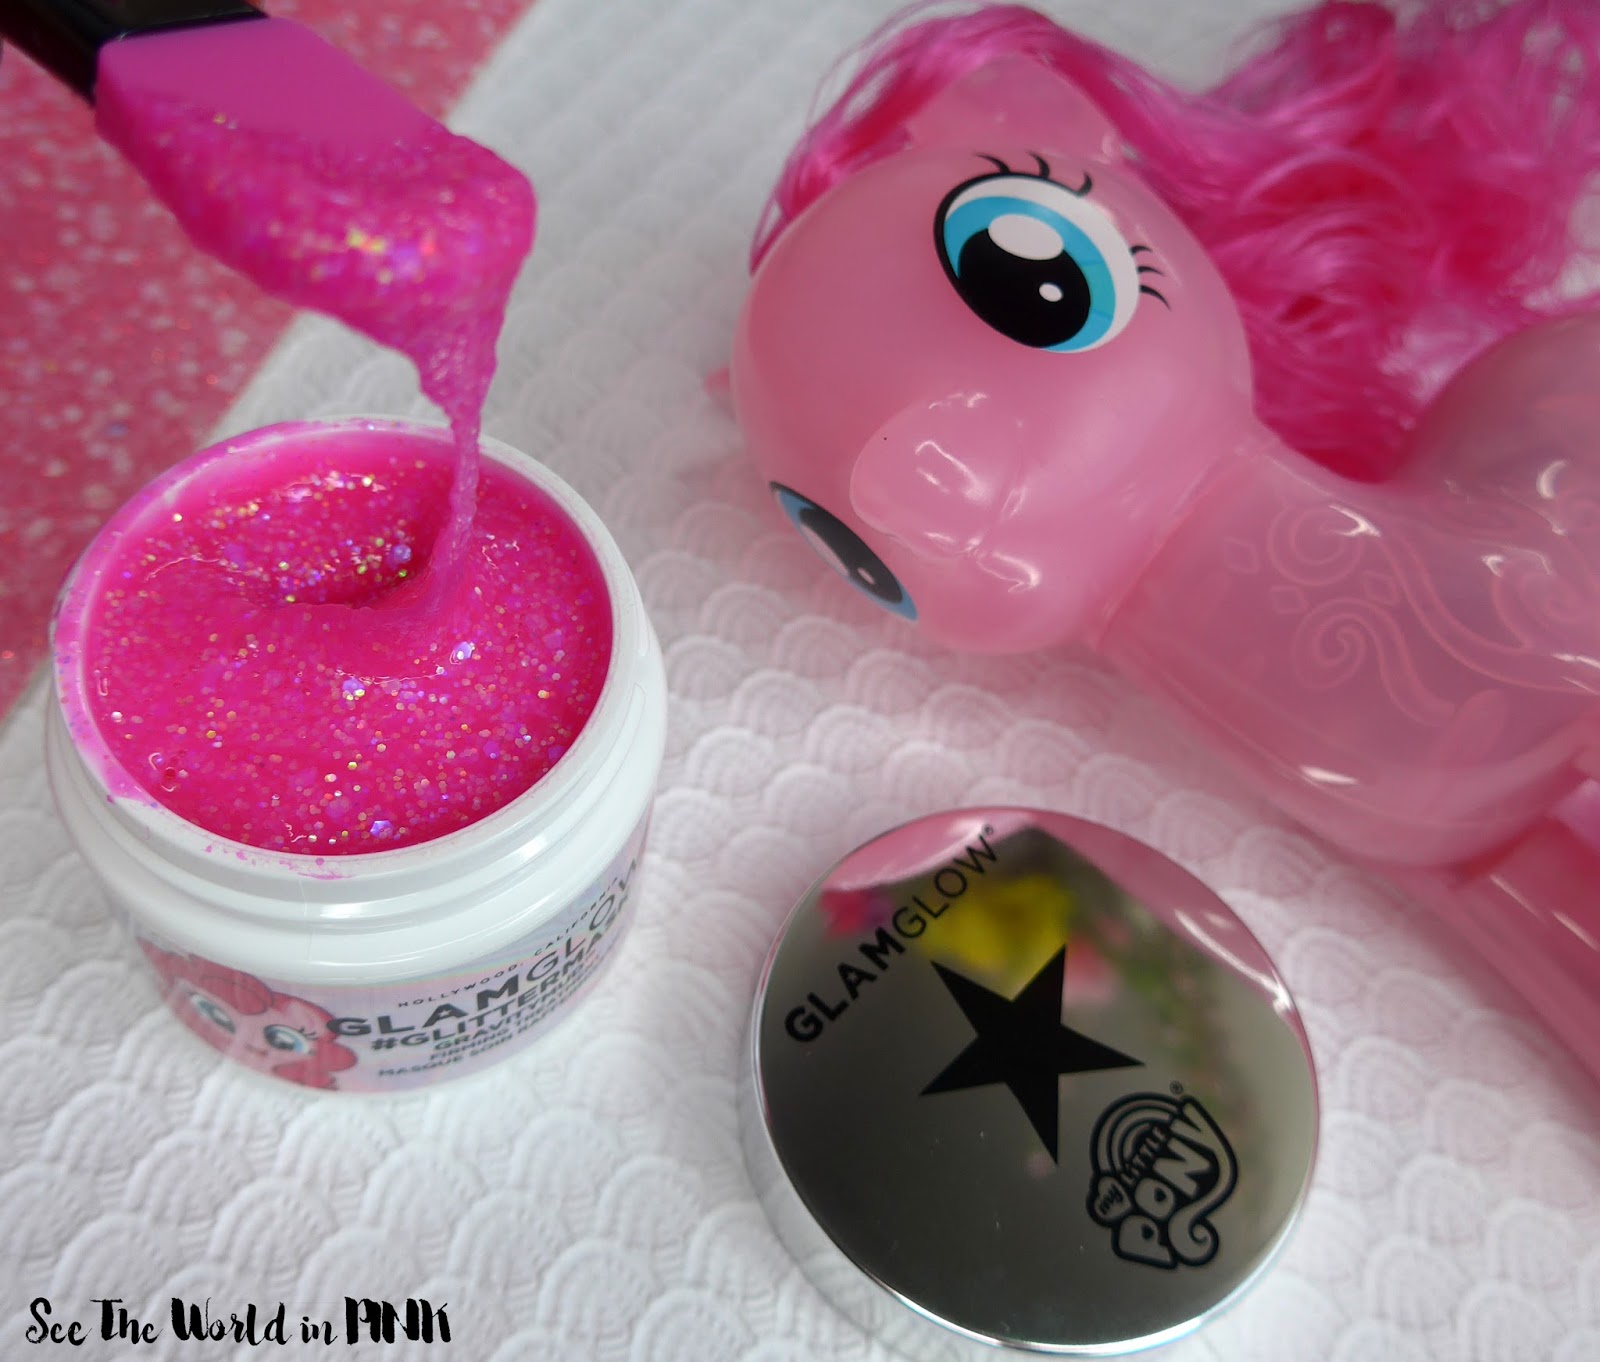 Mask Wednesday - Glamglow x My Little Pony #GlitterMask Pink Glitter GravityMud Firming Treatment 